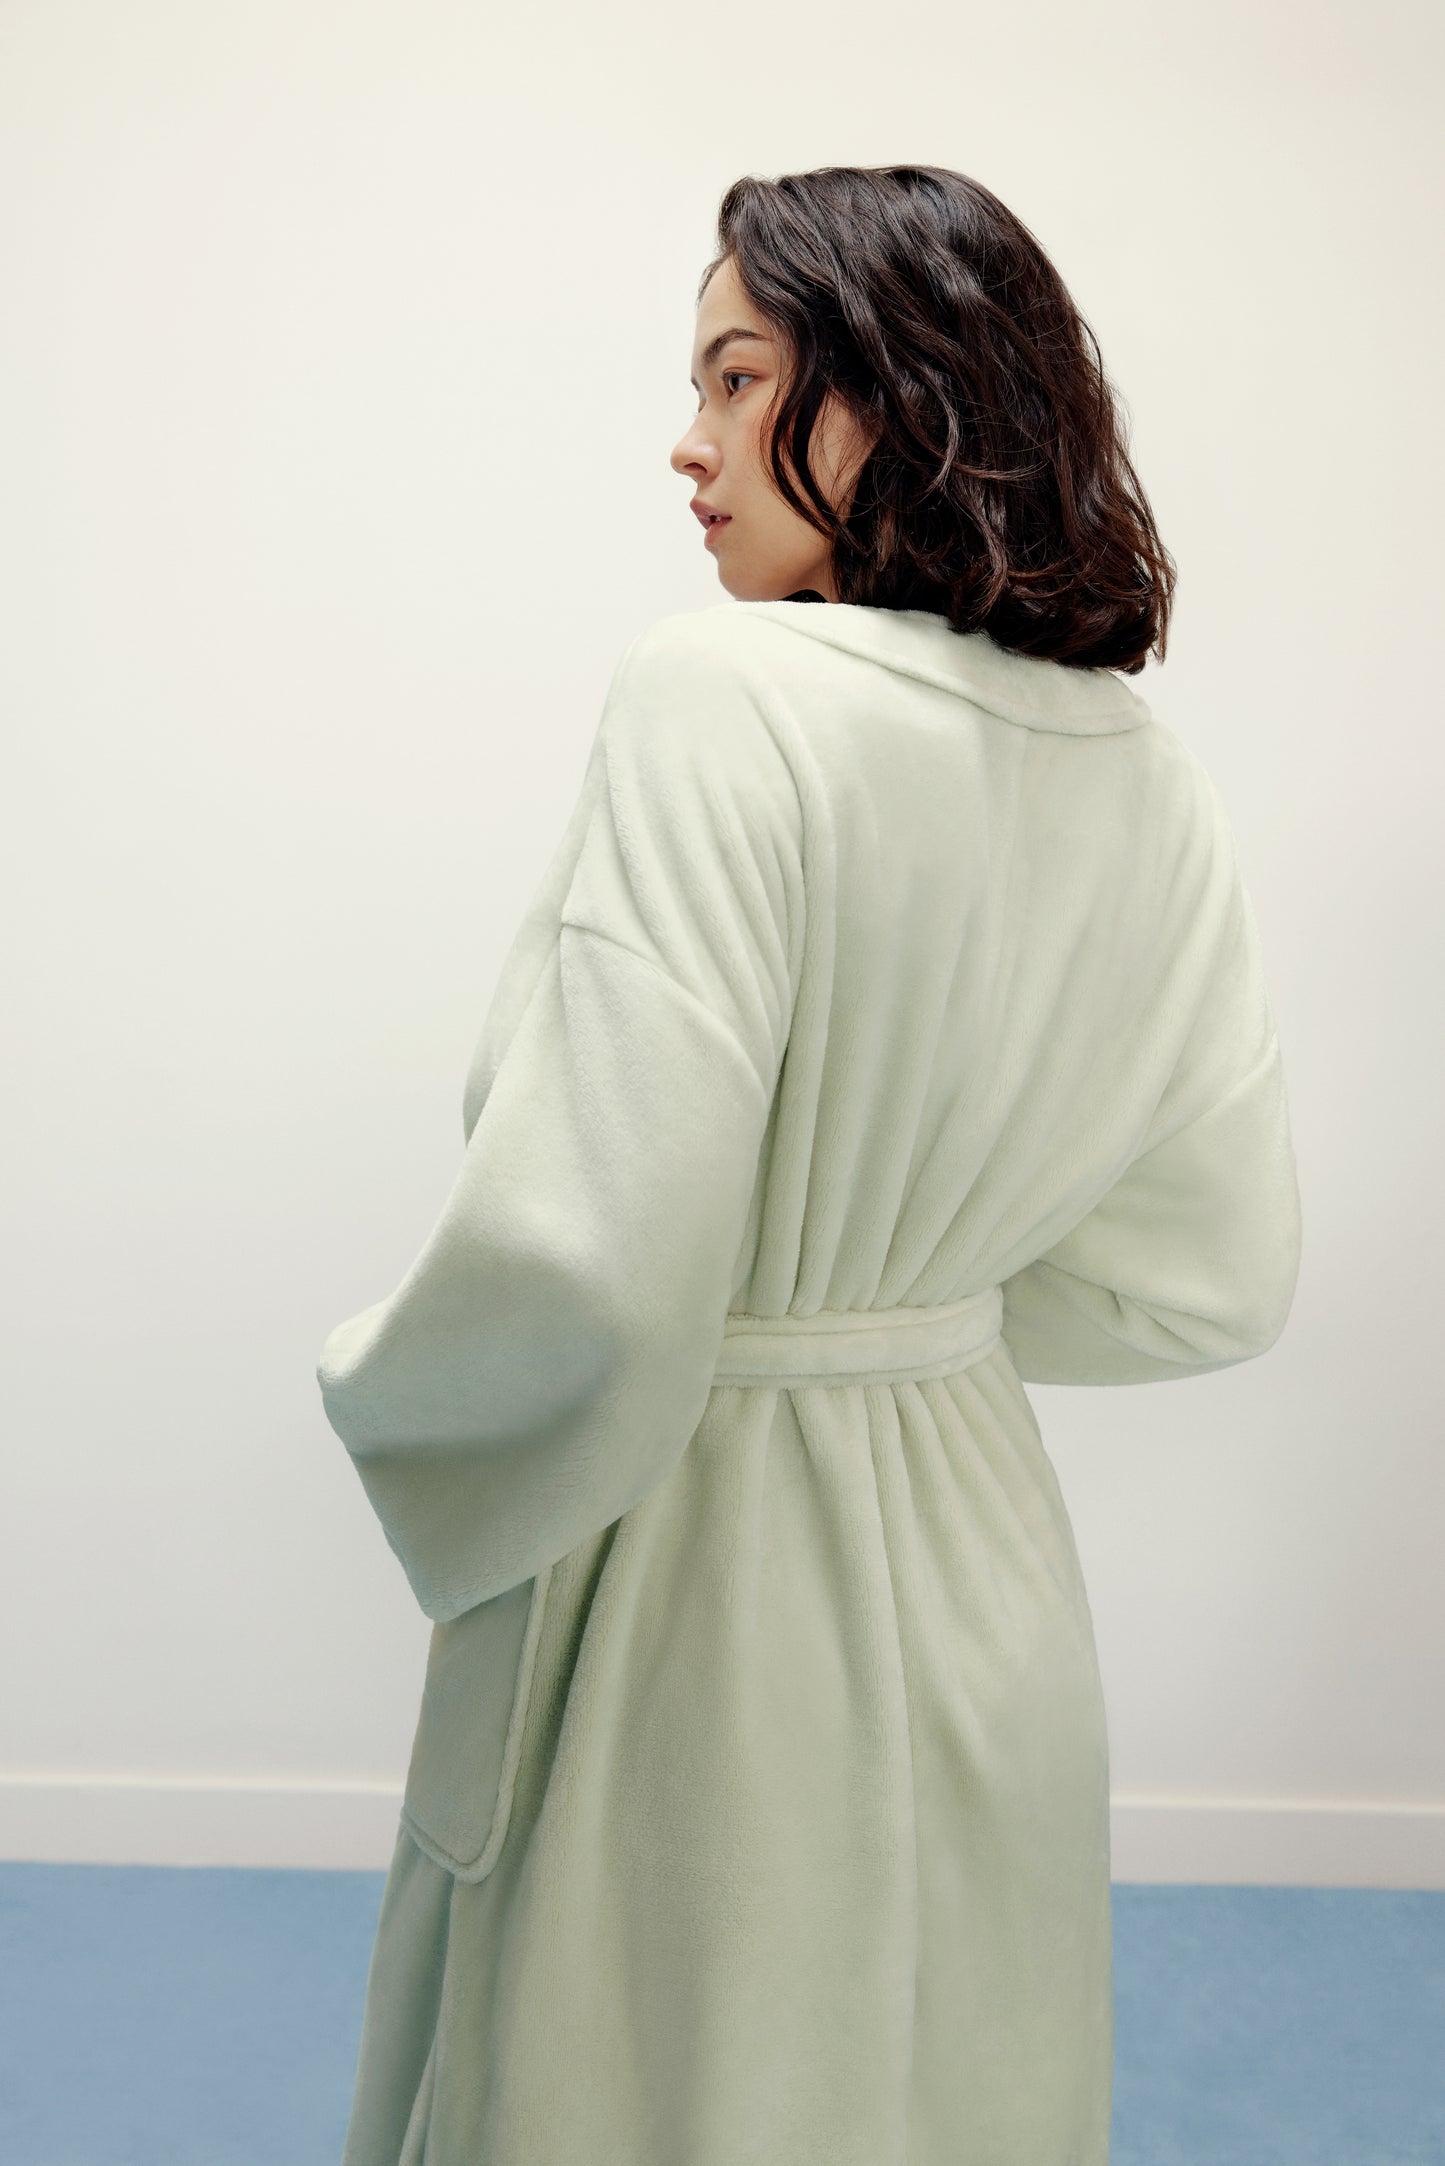 woman wearing a light green fleece robe back view 